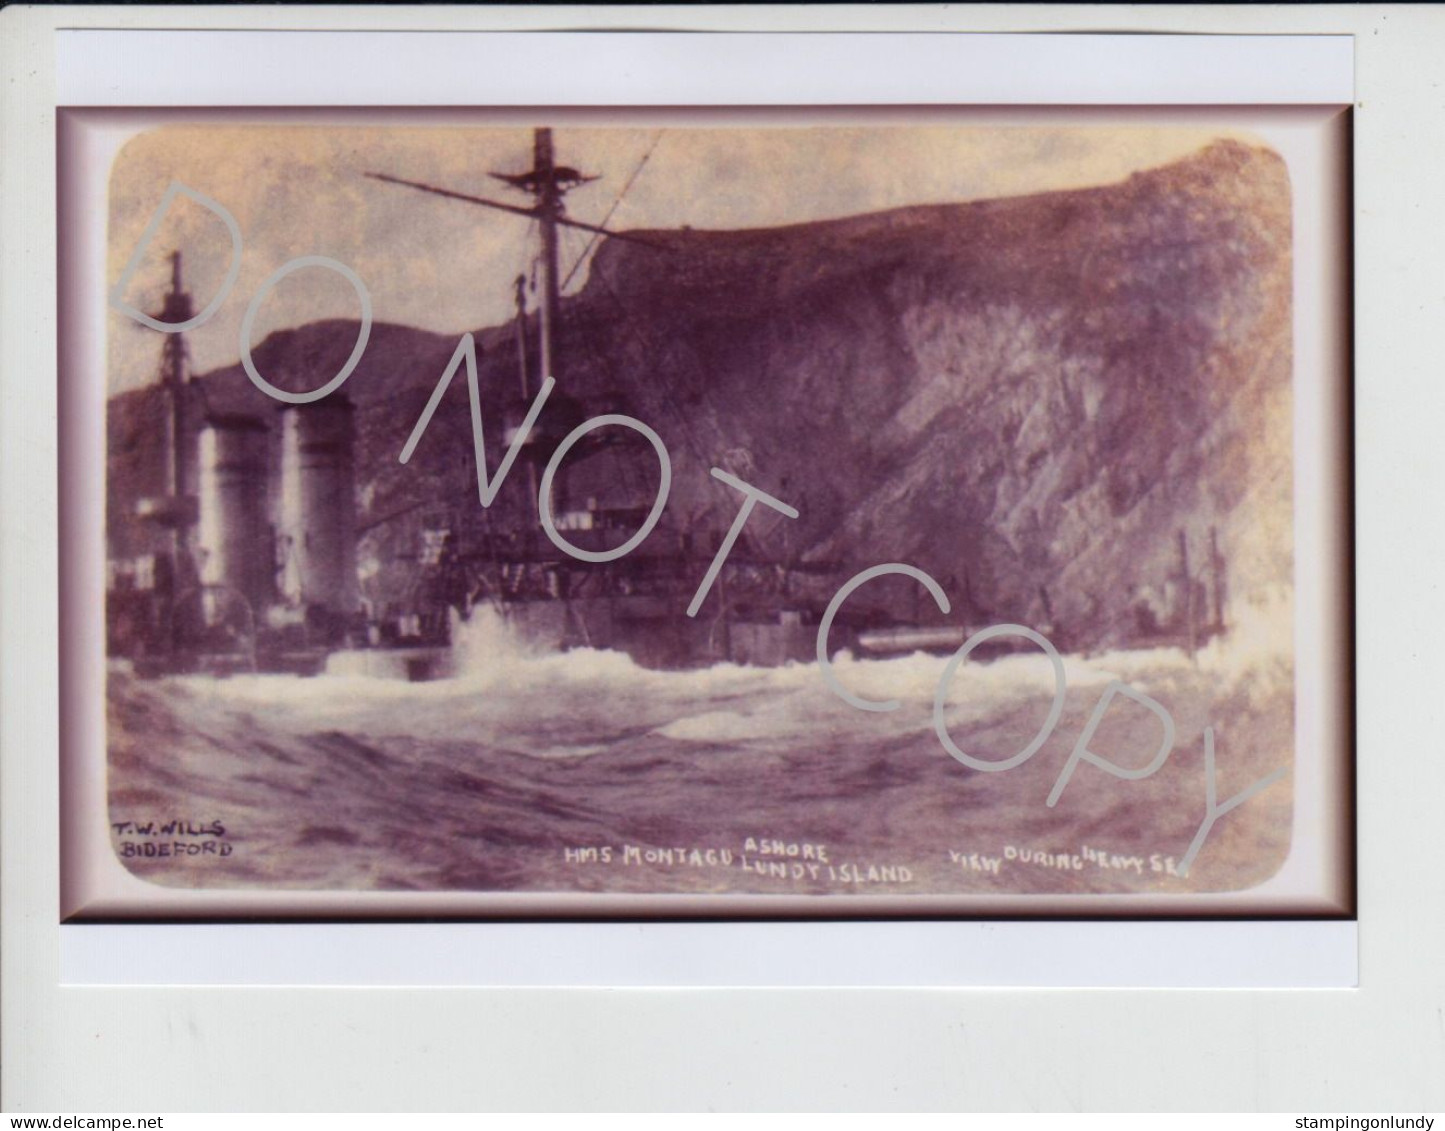 61. WI06. Four Lundy Island HMS Montague/Montagu Warship Produced By Wills Retirment Sale Price Slashed! - Krieg, Militär